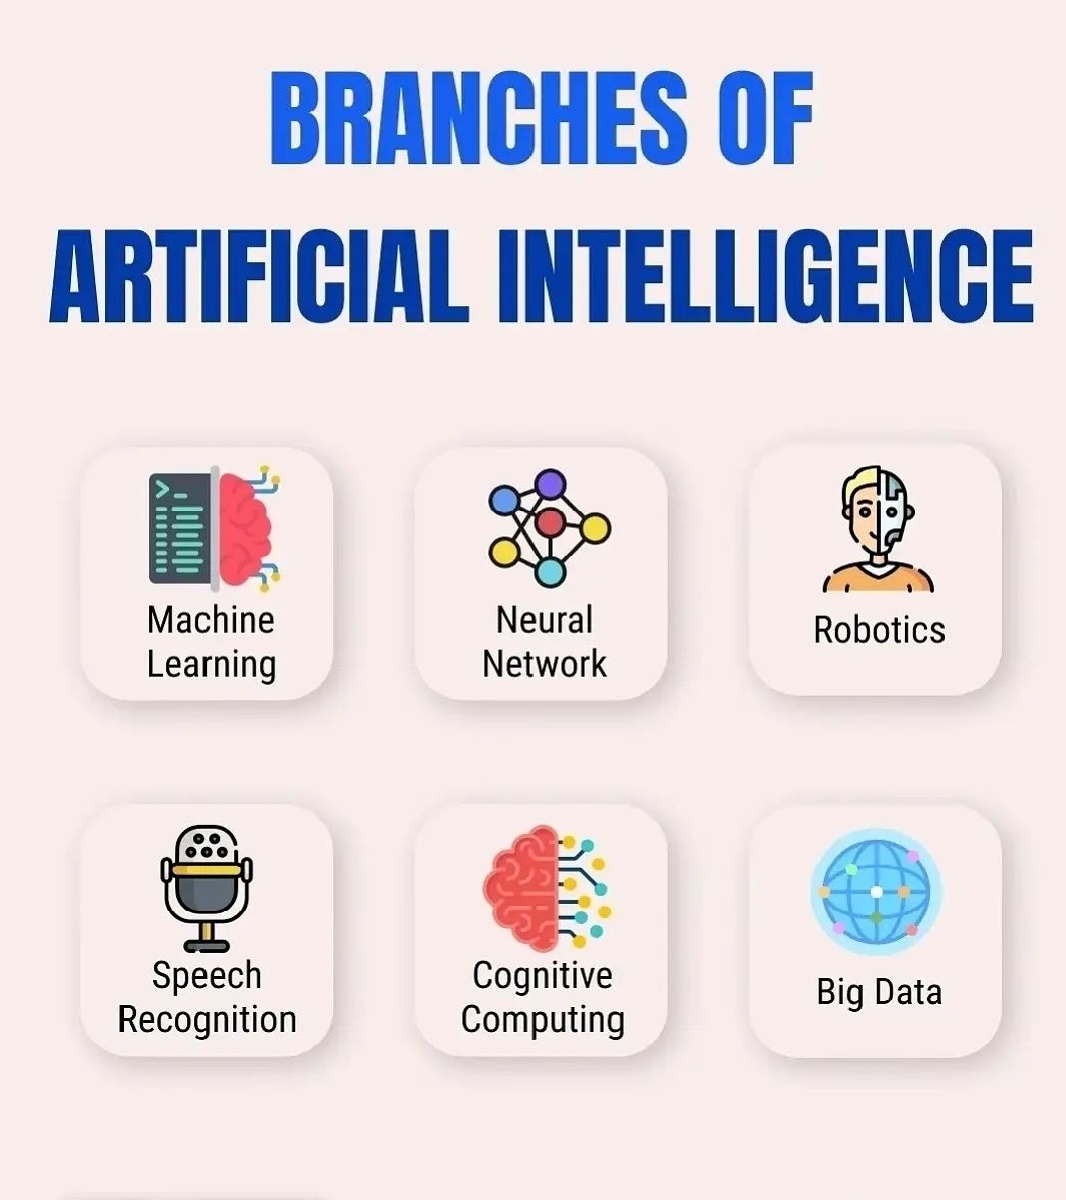 Branches of #ArtificialIntelligence

#bigdata #machinelearning #datascience #bigdataanalytics